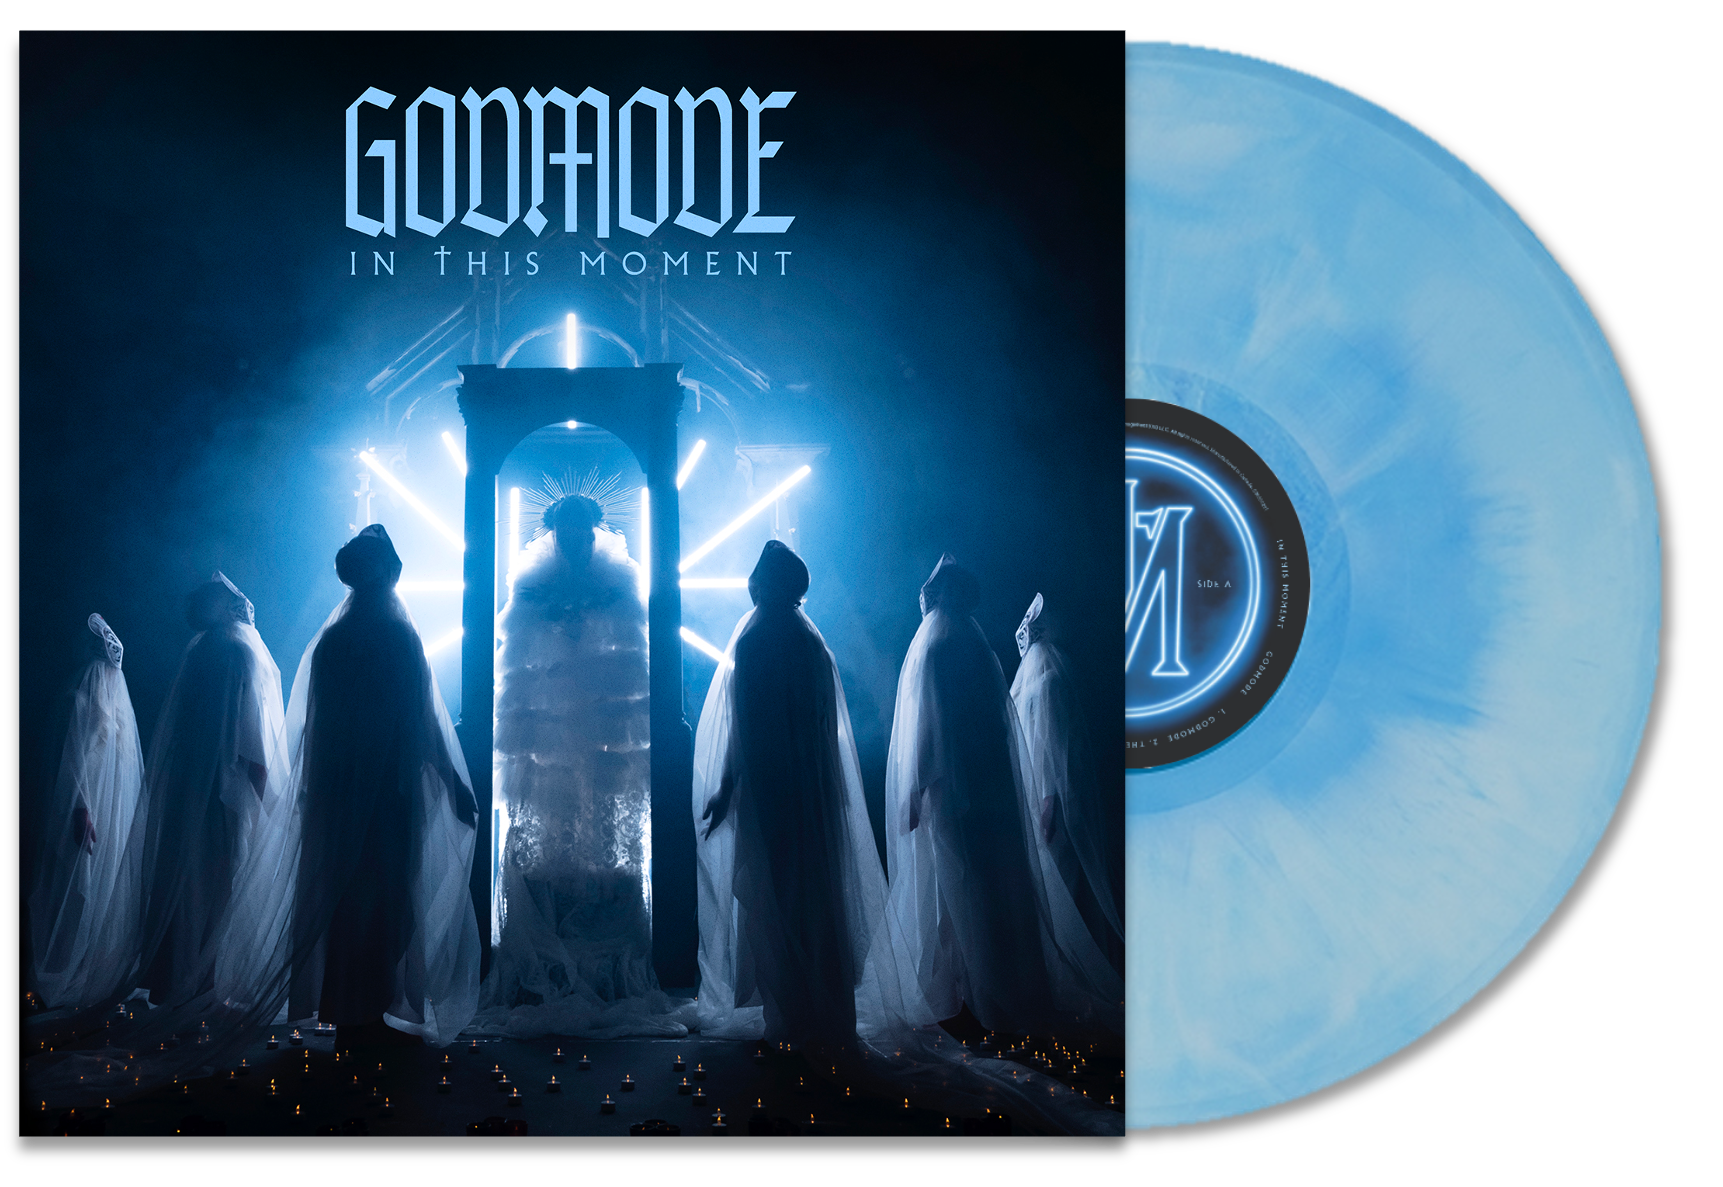 IN THIS MOMENT 'GODMODE' LP (Color Vinyl) Album Cover